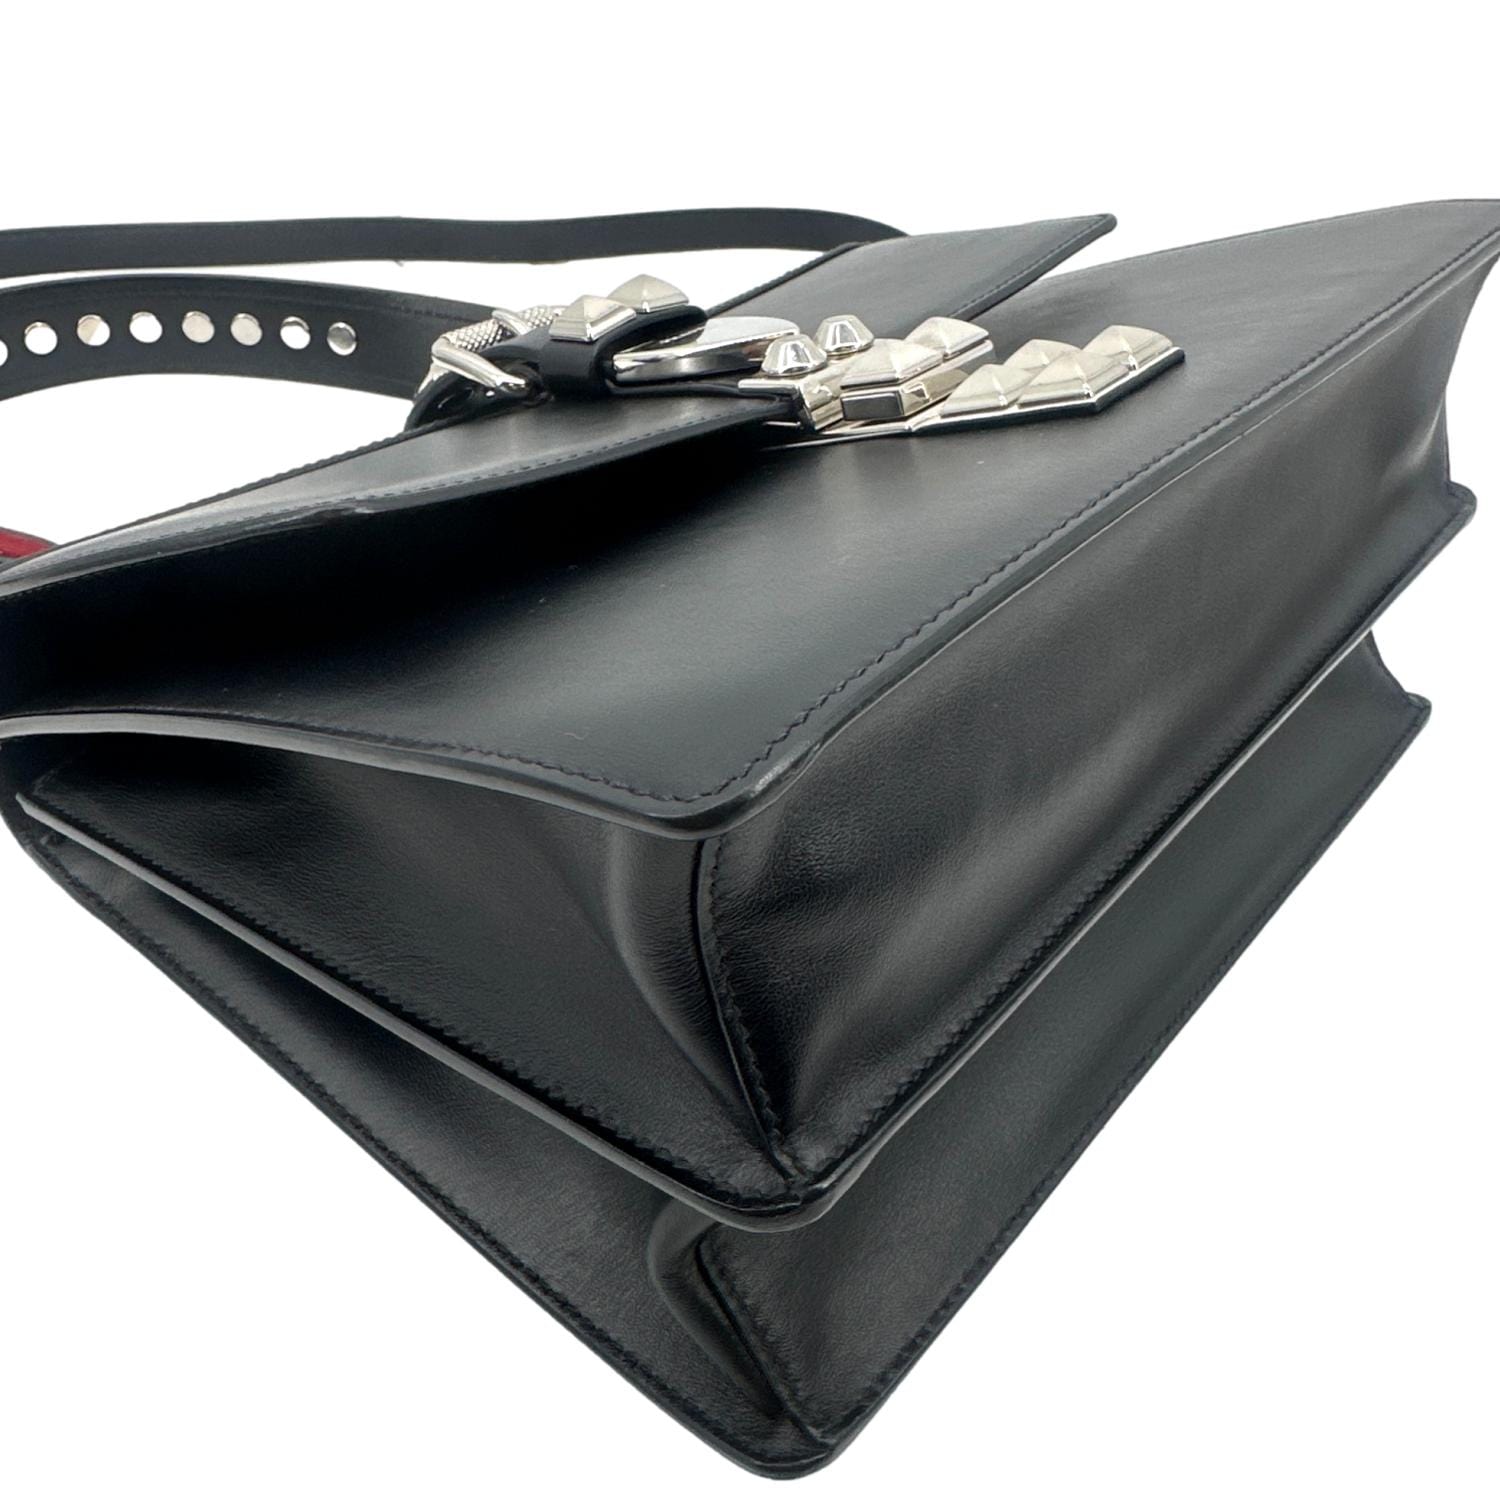 Prada Elektra Crossbody Bag in Black City Calfskin & Saffiano Leather –  Essex Fashion House